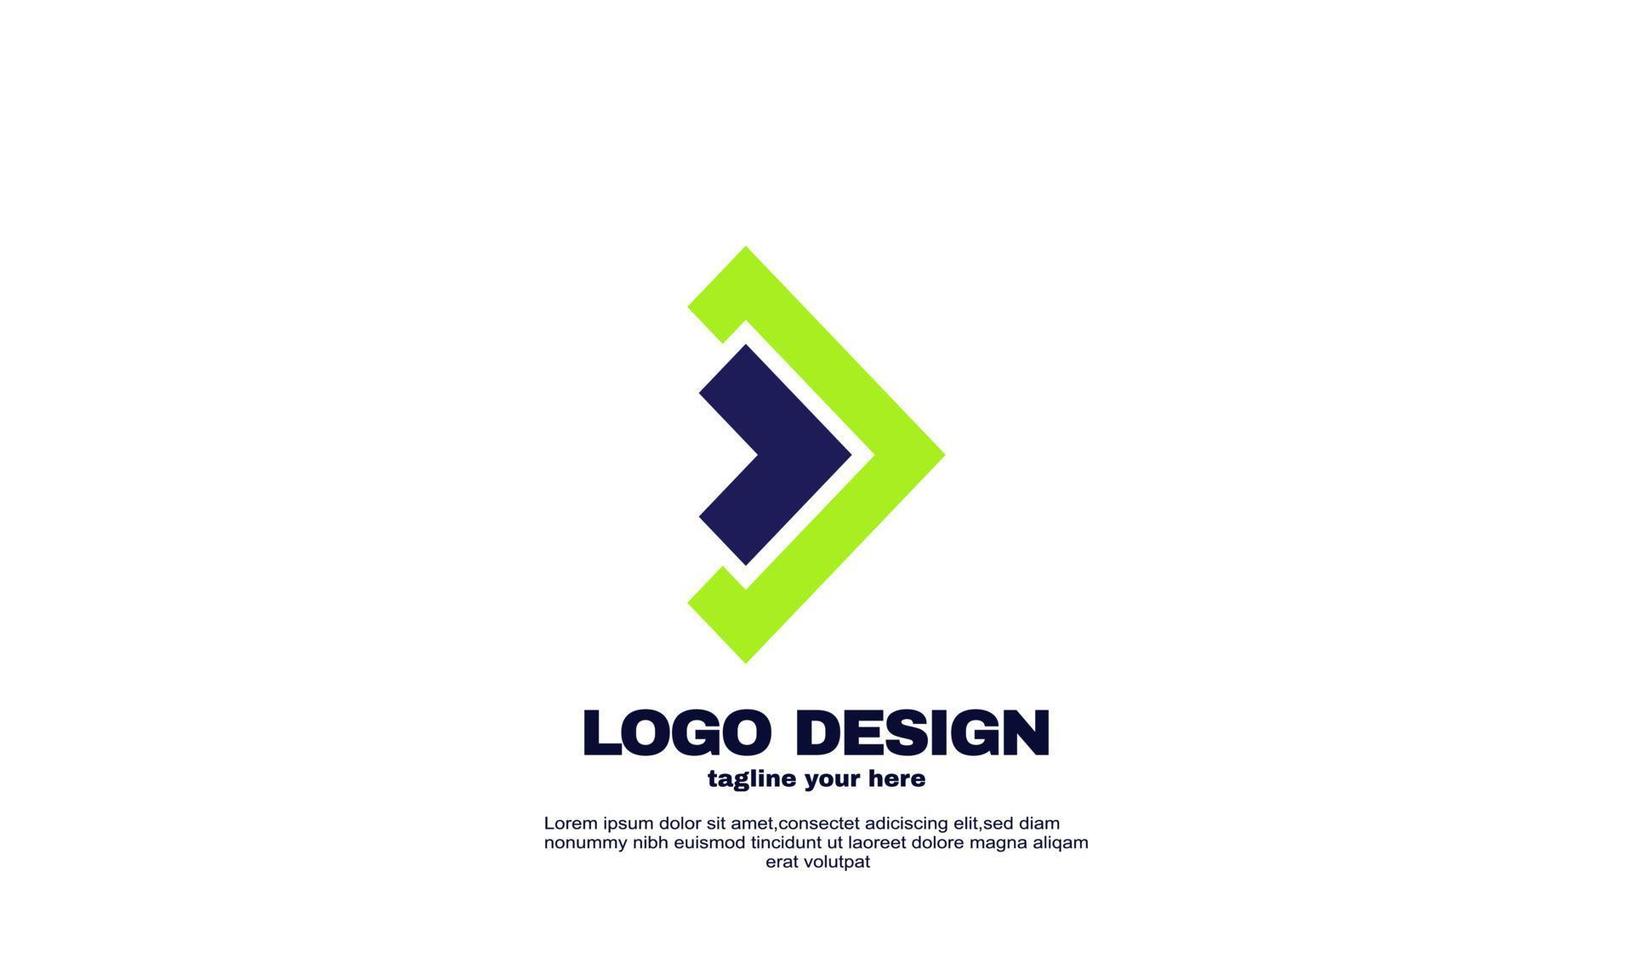 elementos do vetor modelo de logotipo de design de sua empresa